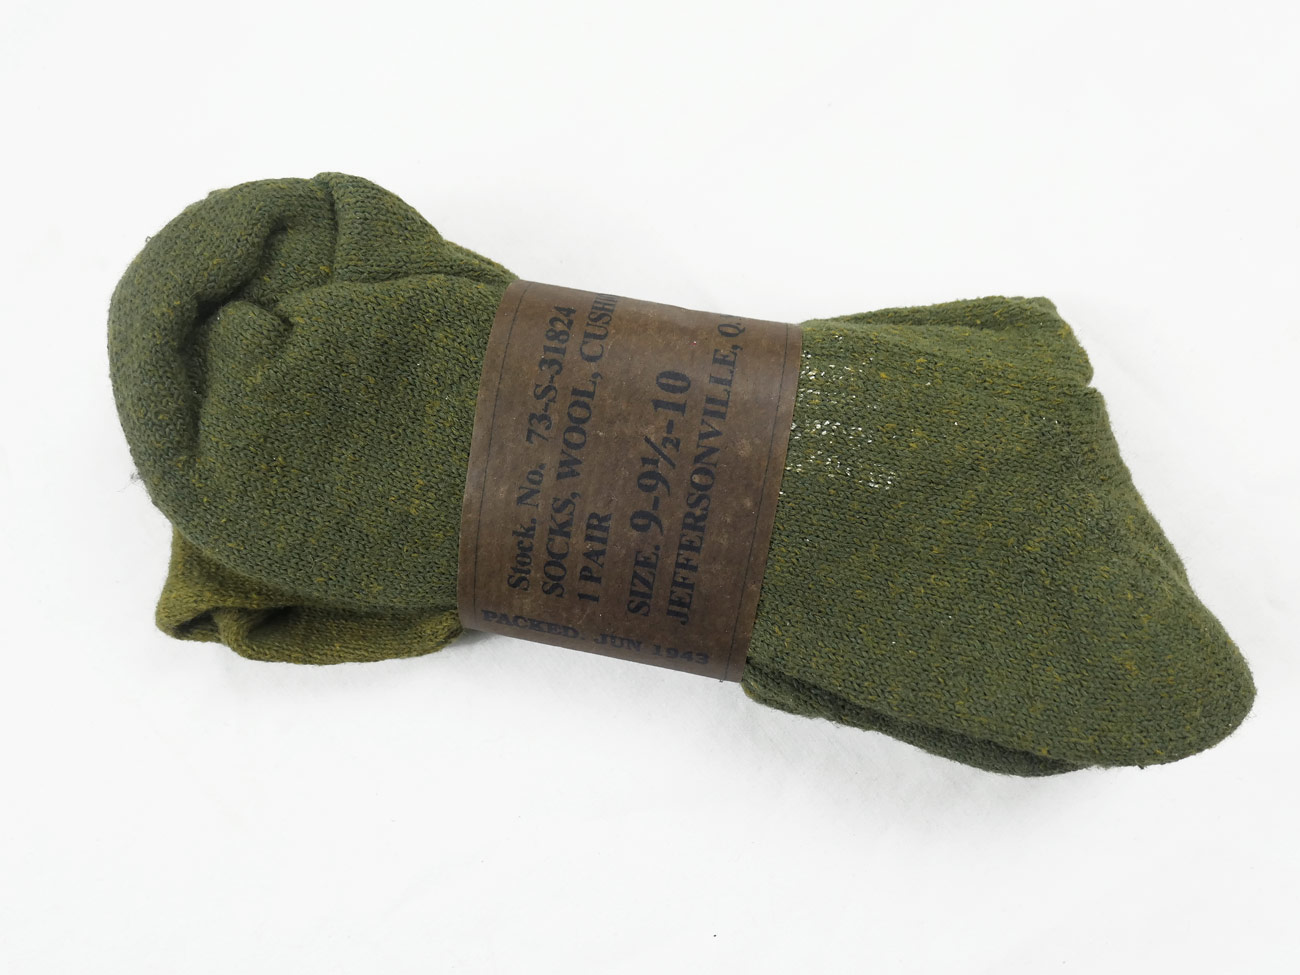 US ARMY WW2 Stiefel Socken size 9-9.5-10 socks wool 